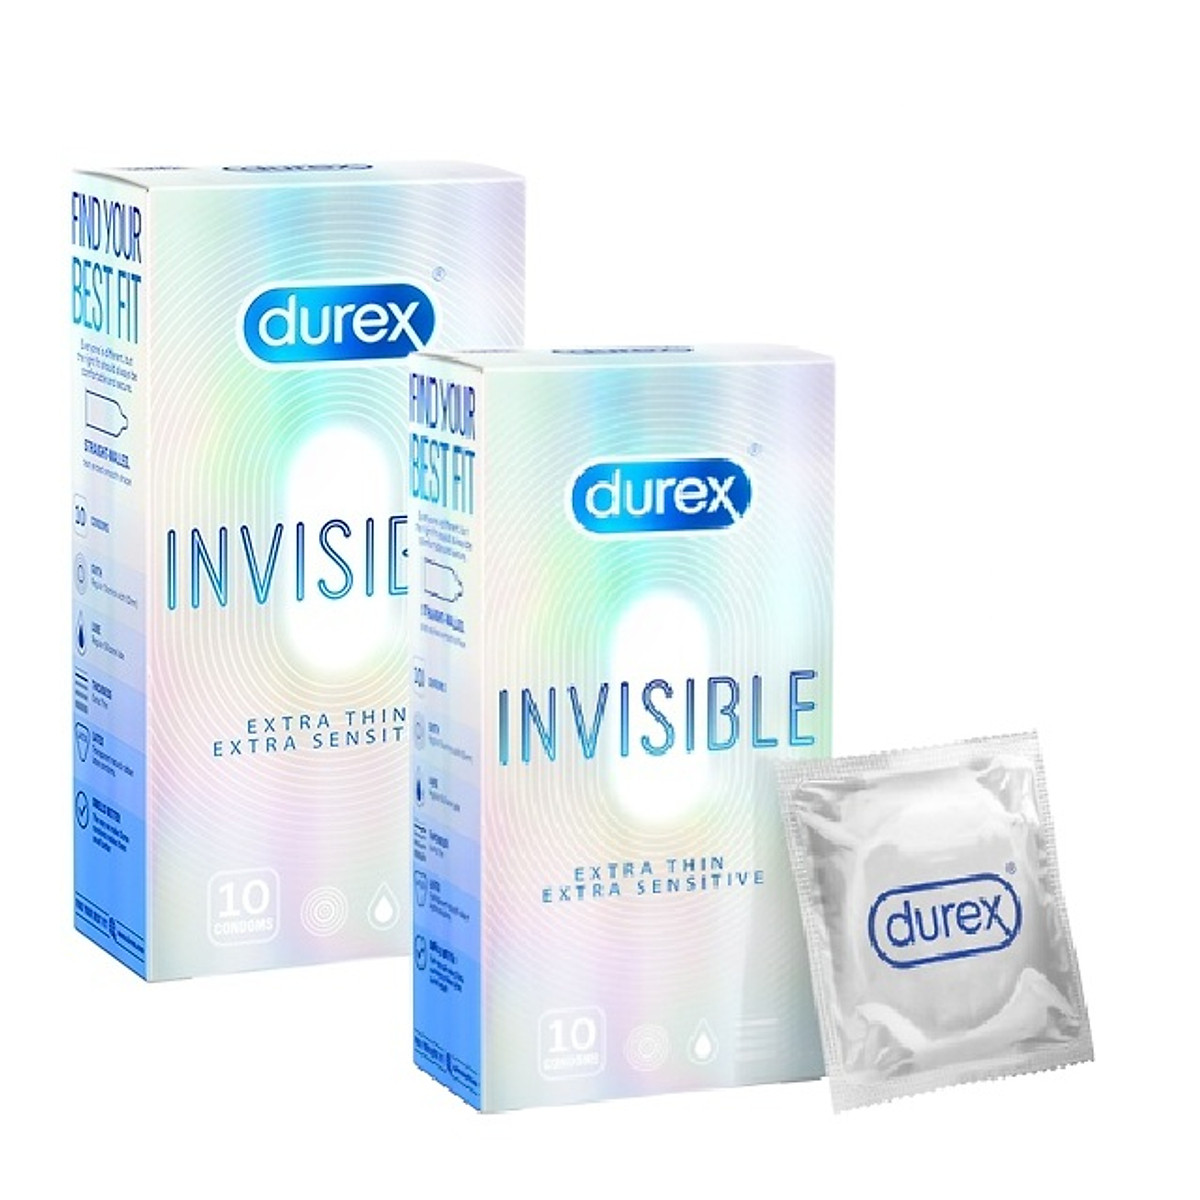 Durex Invisible Extra Thin, Extra Sensitive